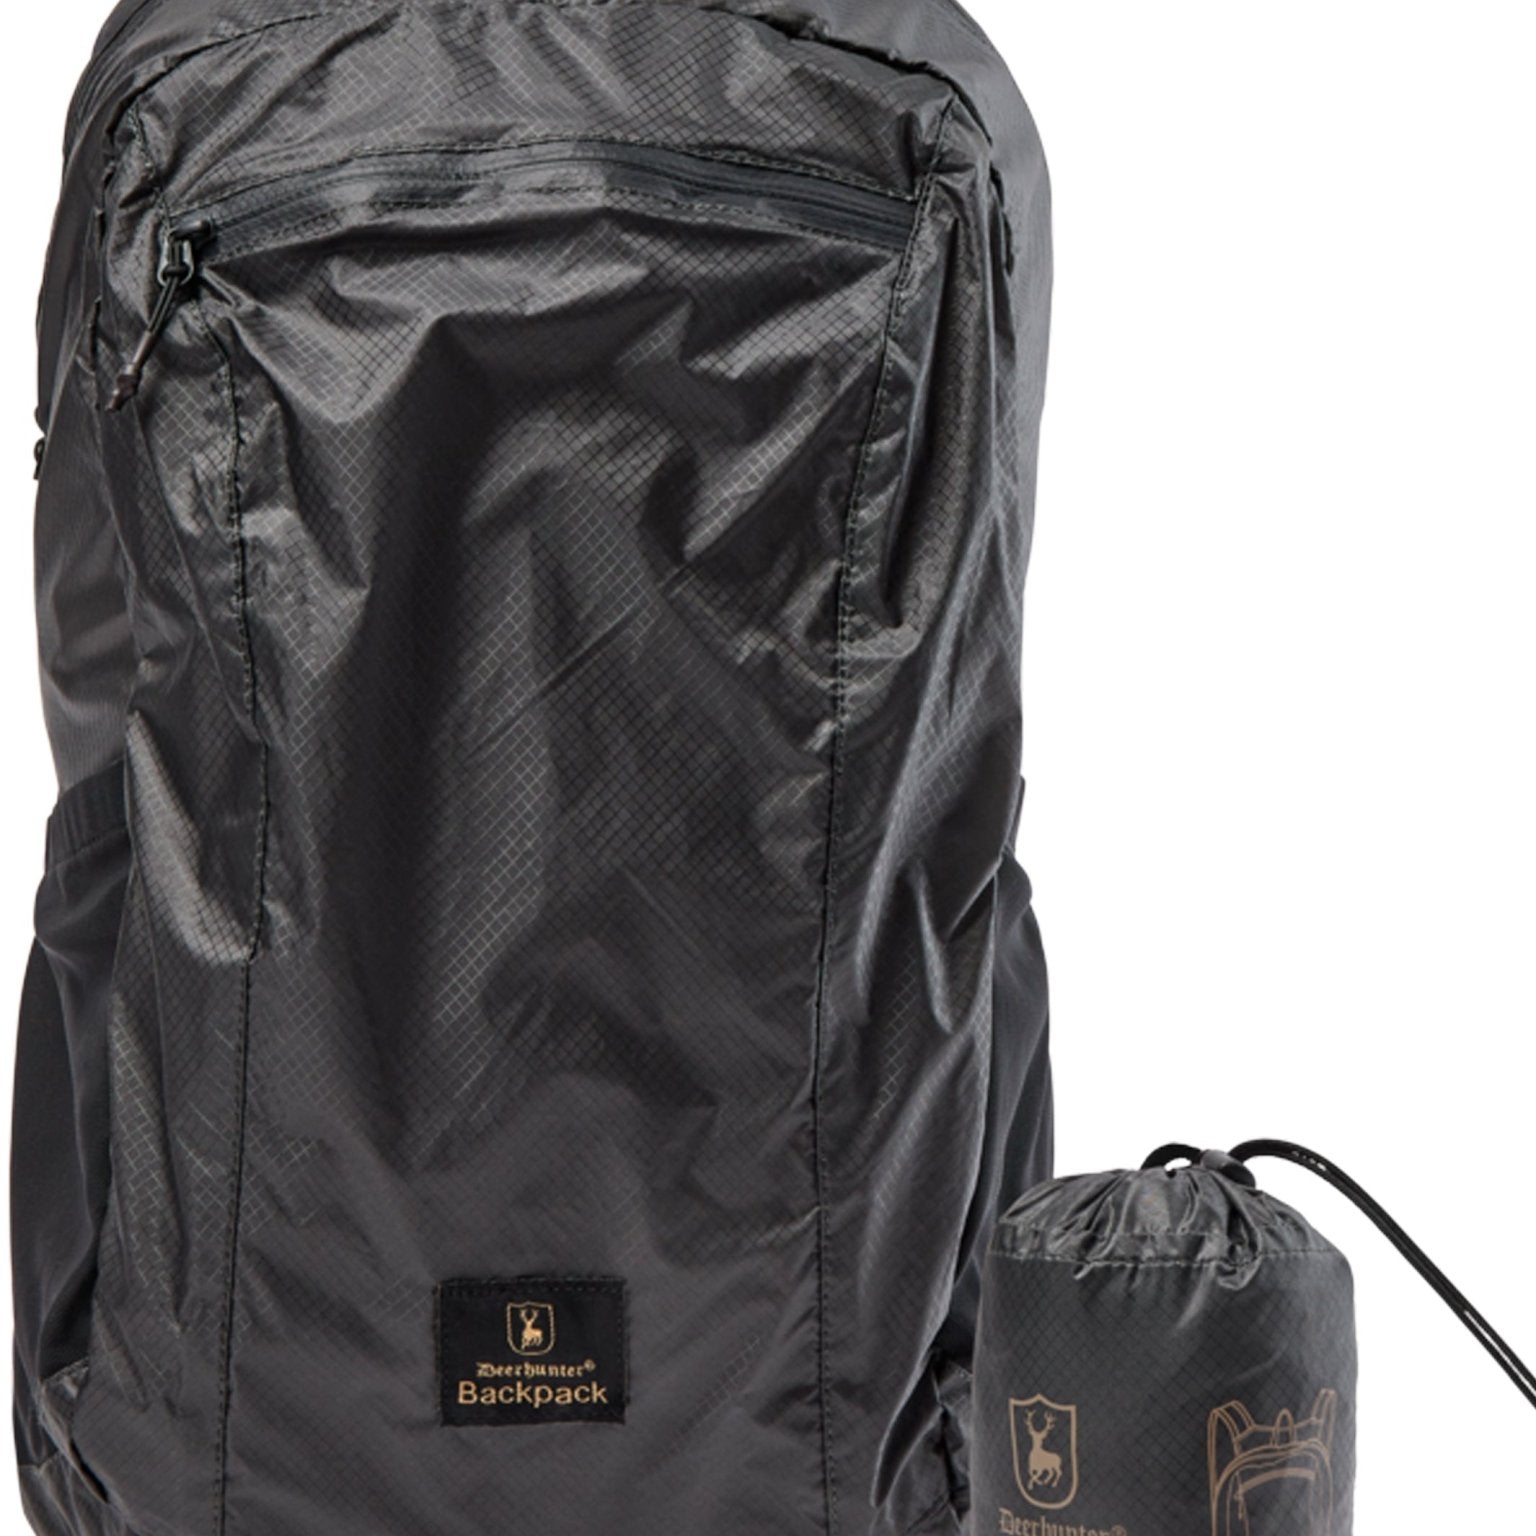 4elementsclothingDeerhunterDeerhunter - Packable Backpack / Rucksack Bag 24 Litre / Lightweight water Repellent 24LBagSO2 9025-999-24